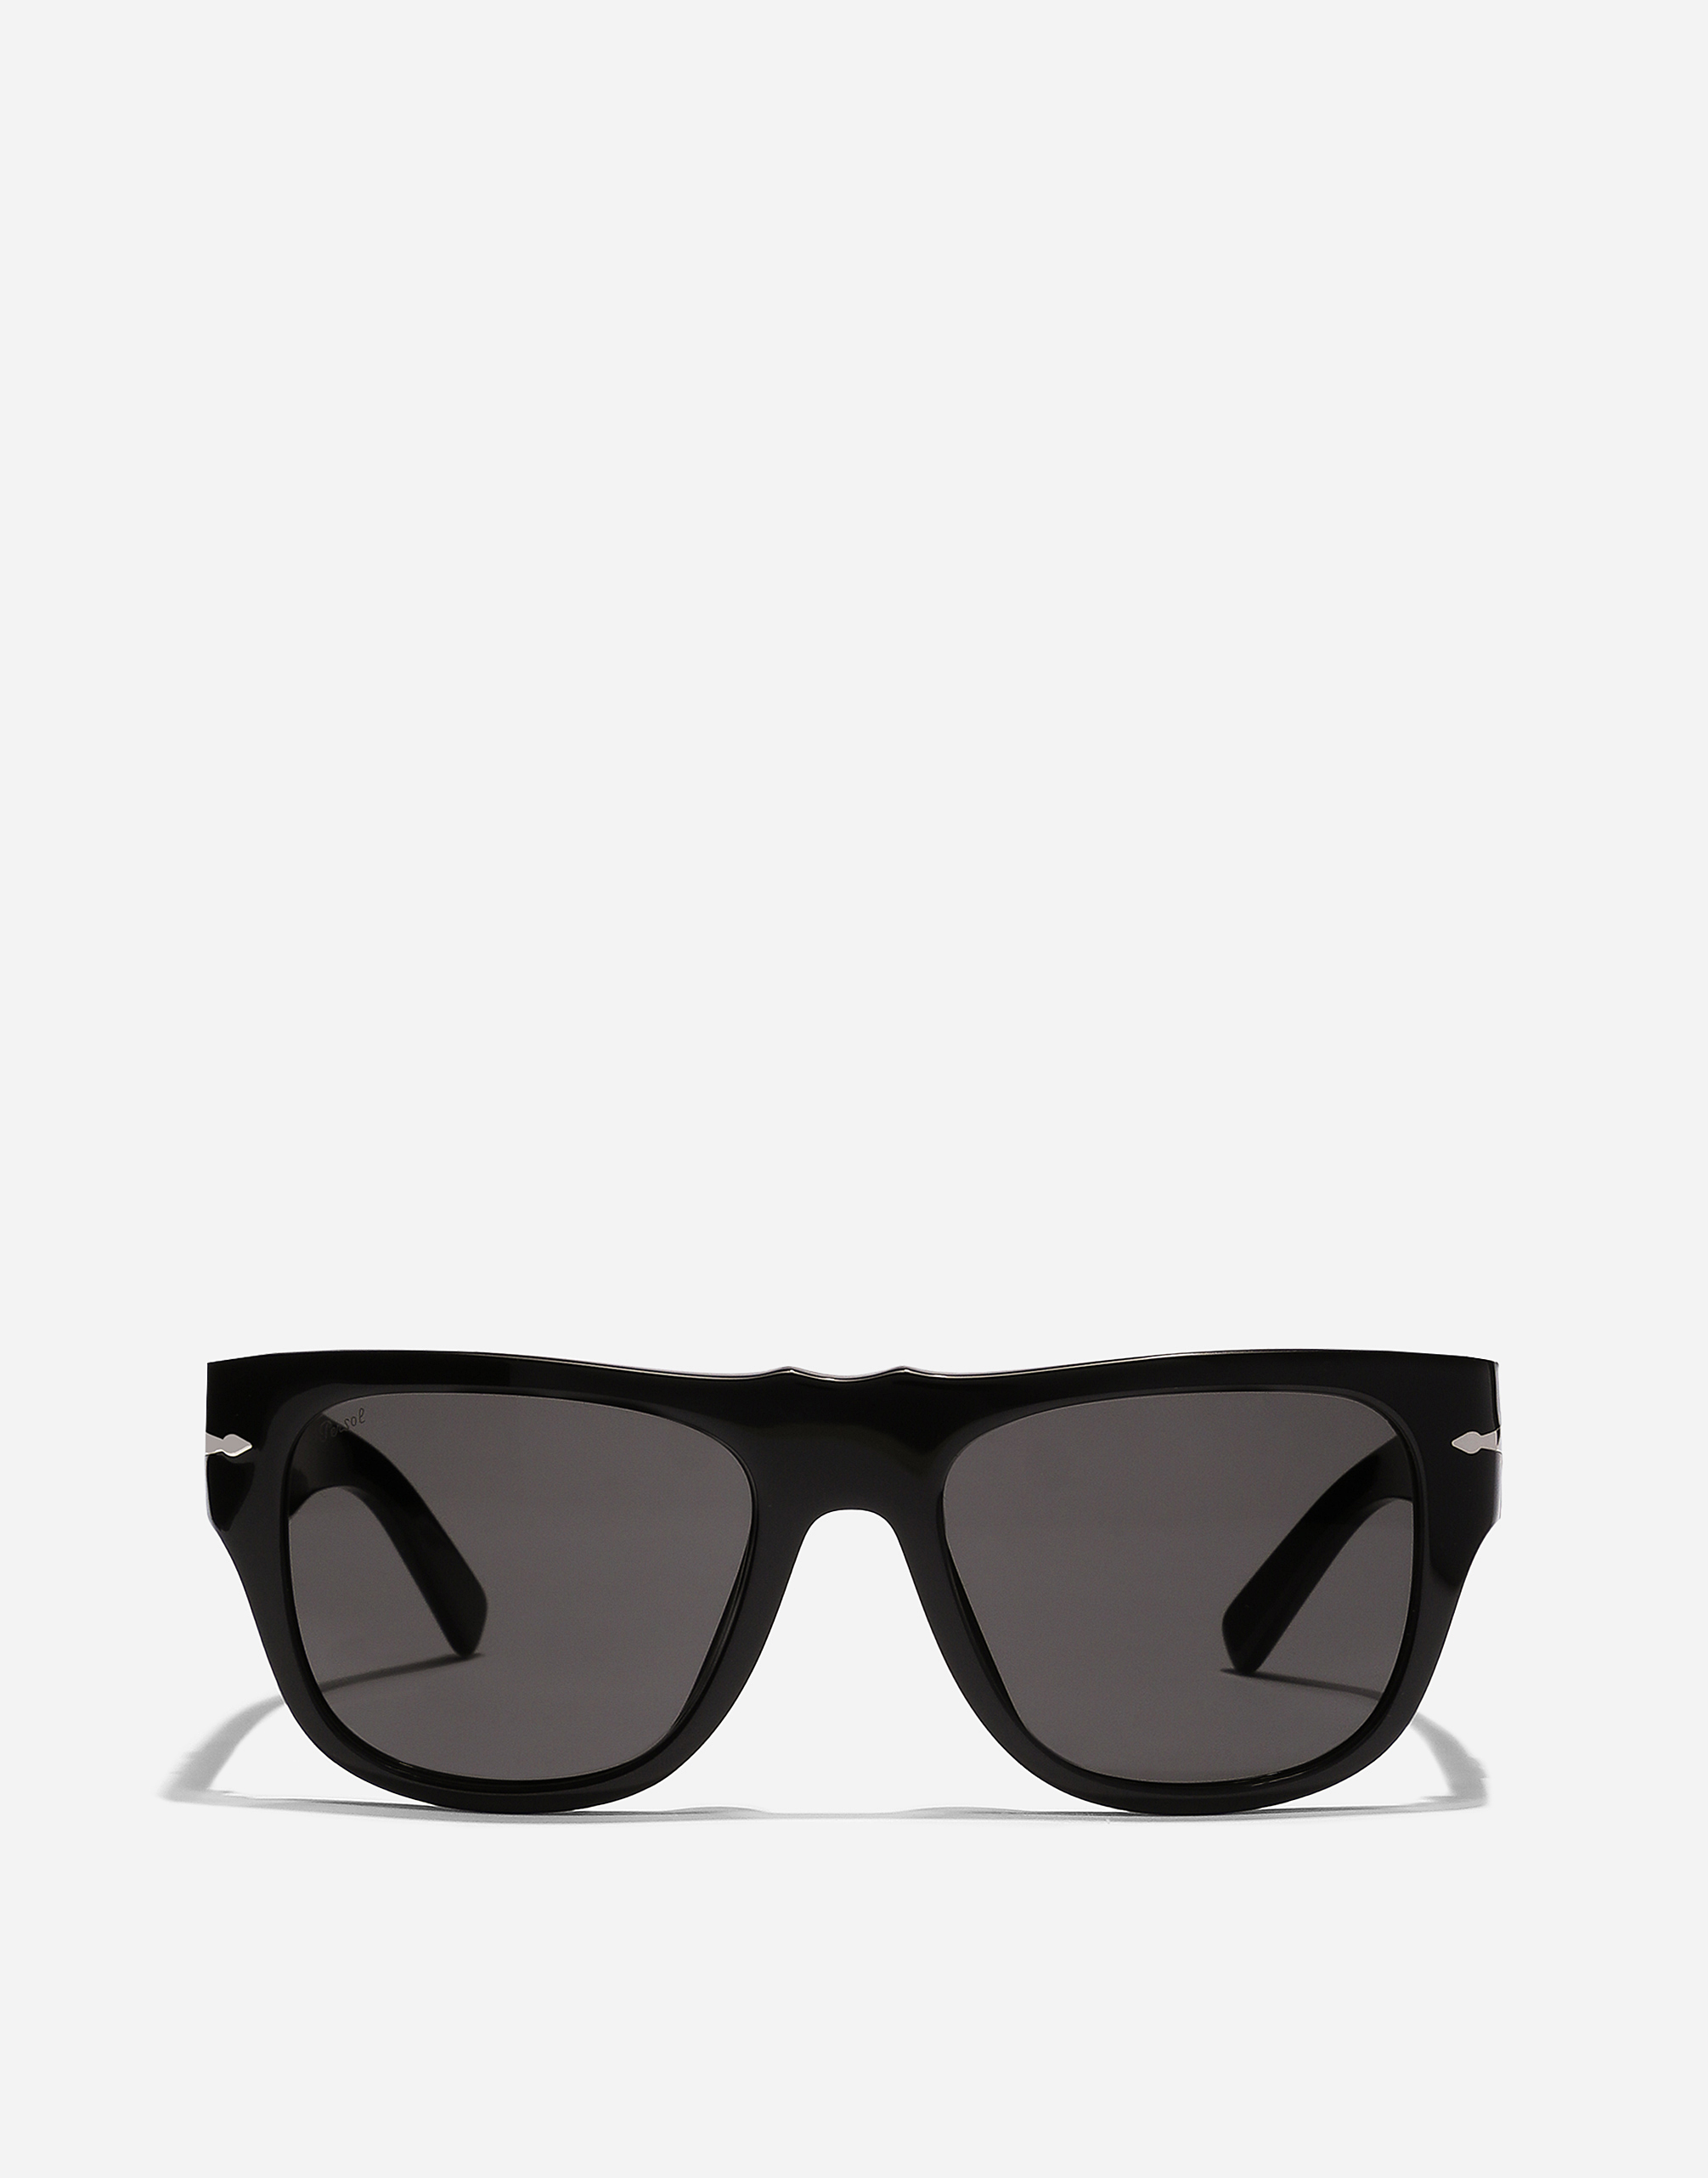 Dolce&Gabbana x Persol sunglasses in black